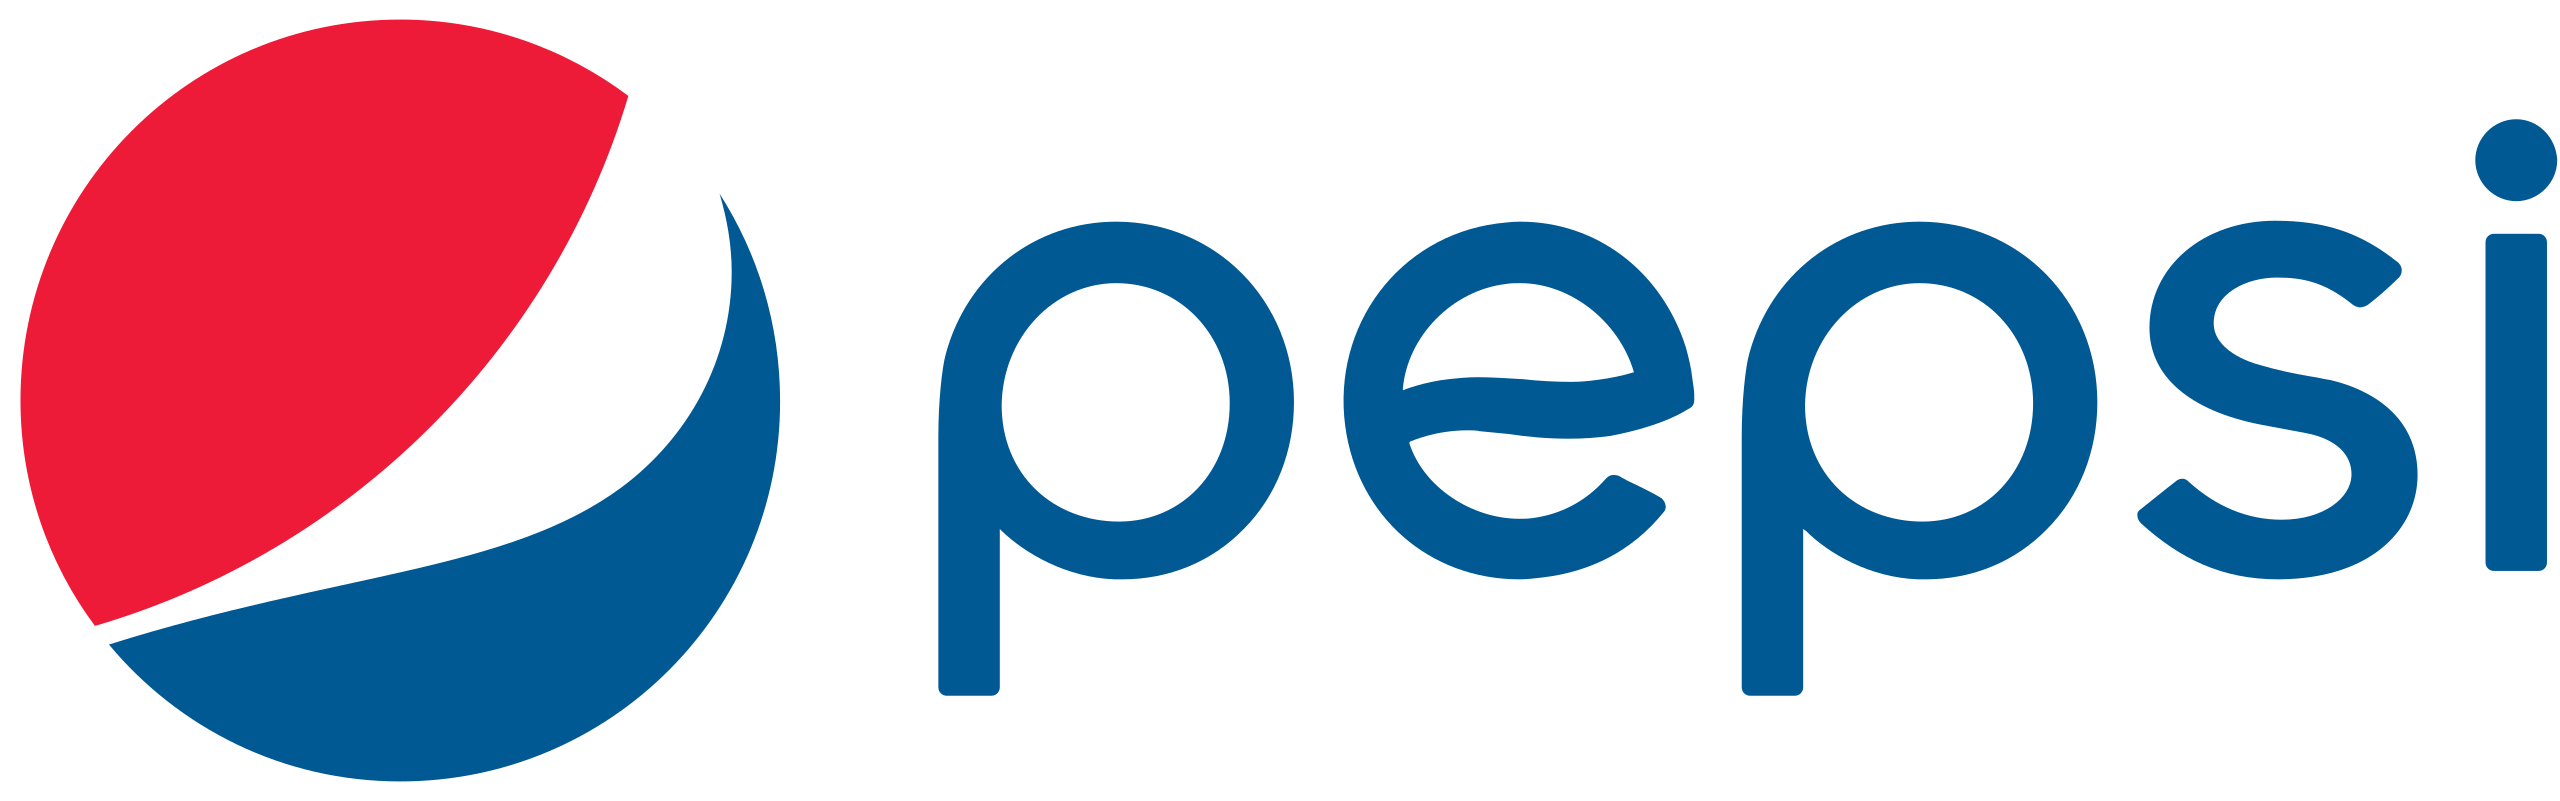 Pepsi_logo_(2014).svg